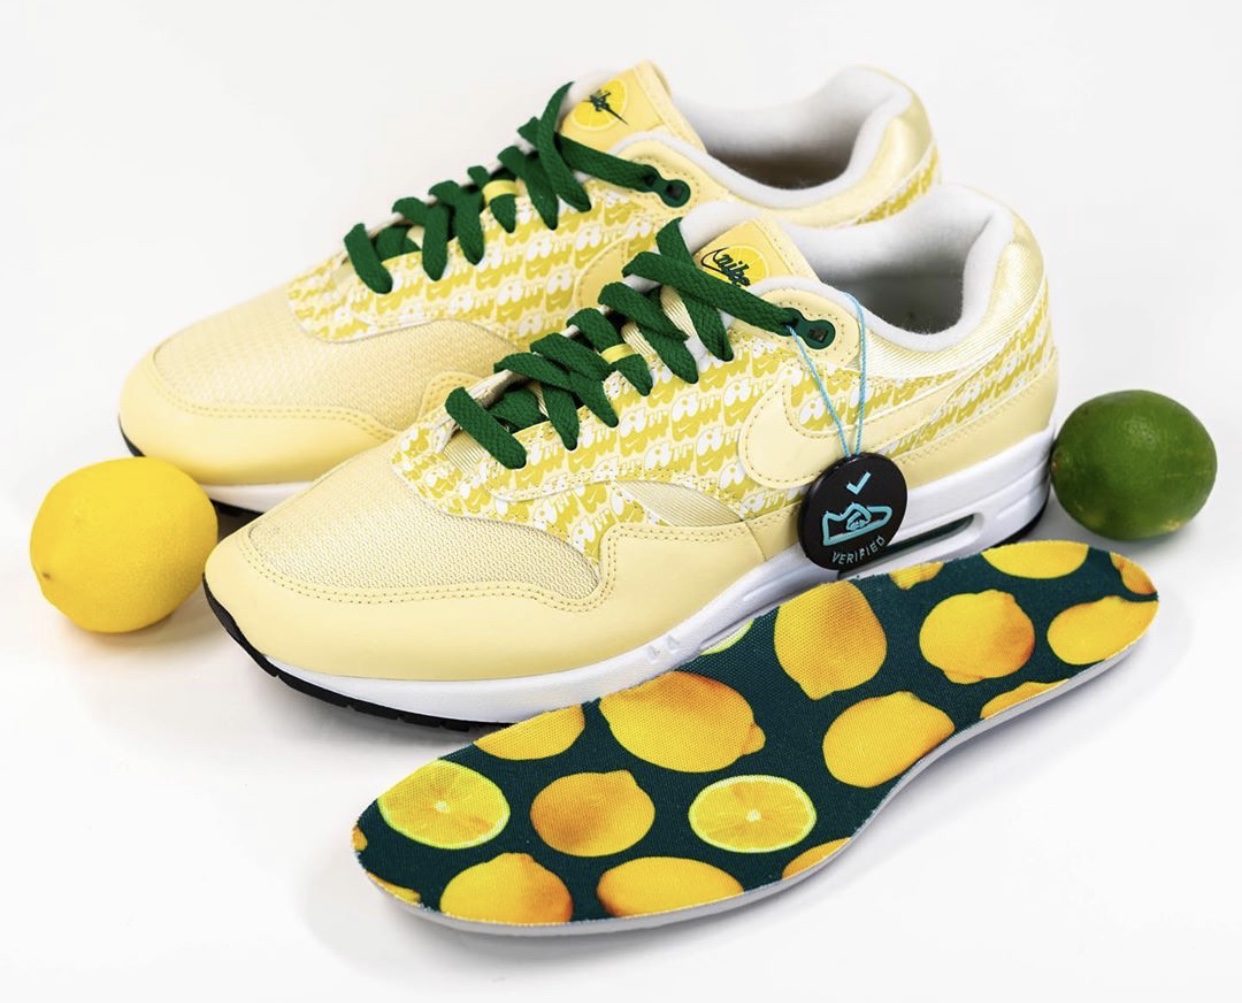 Nike Air Max 1 Lemonade CJ0609-700 2020 Release Info